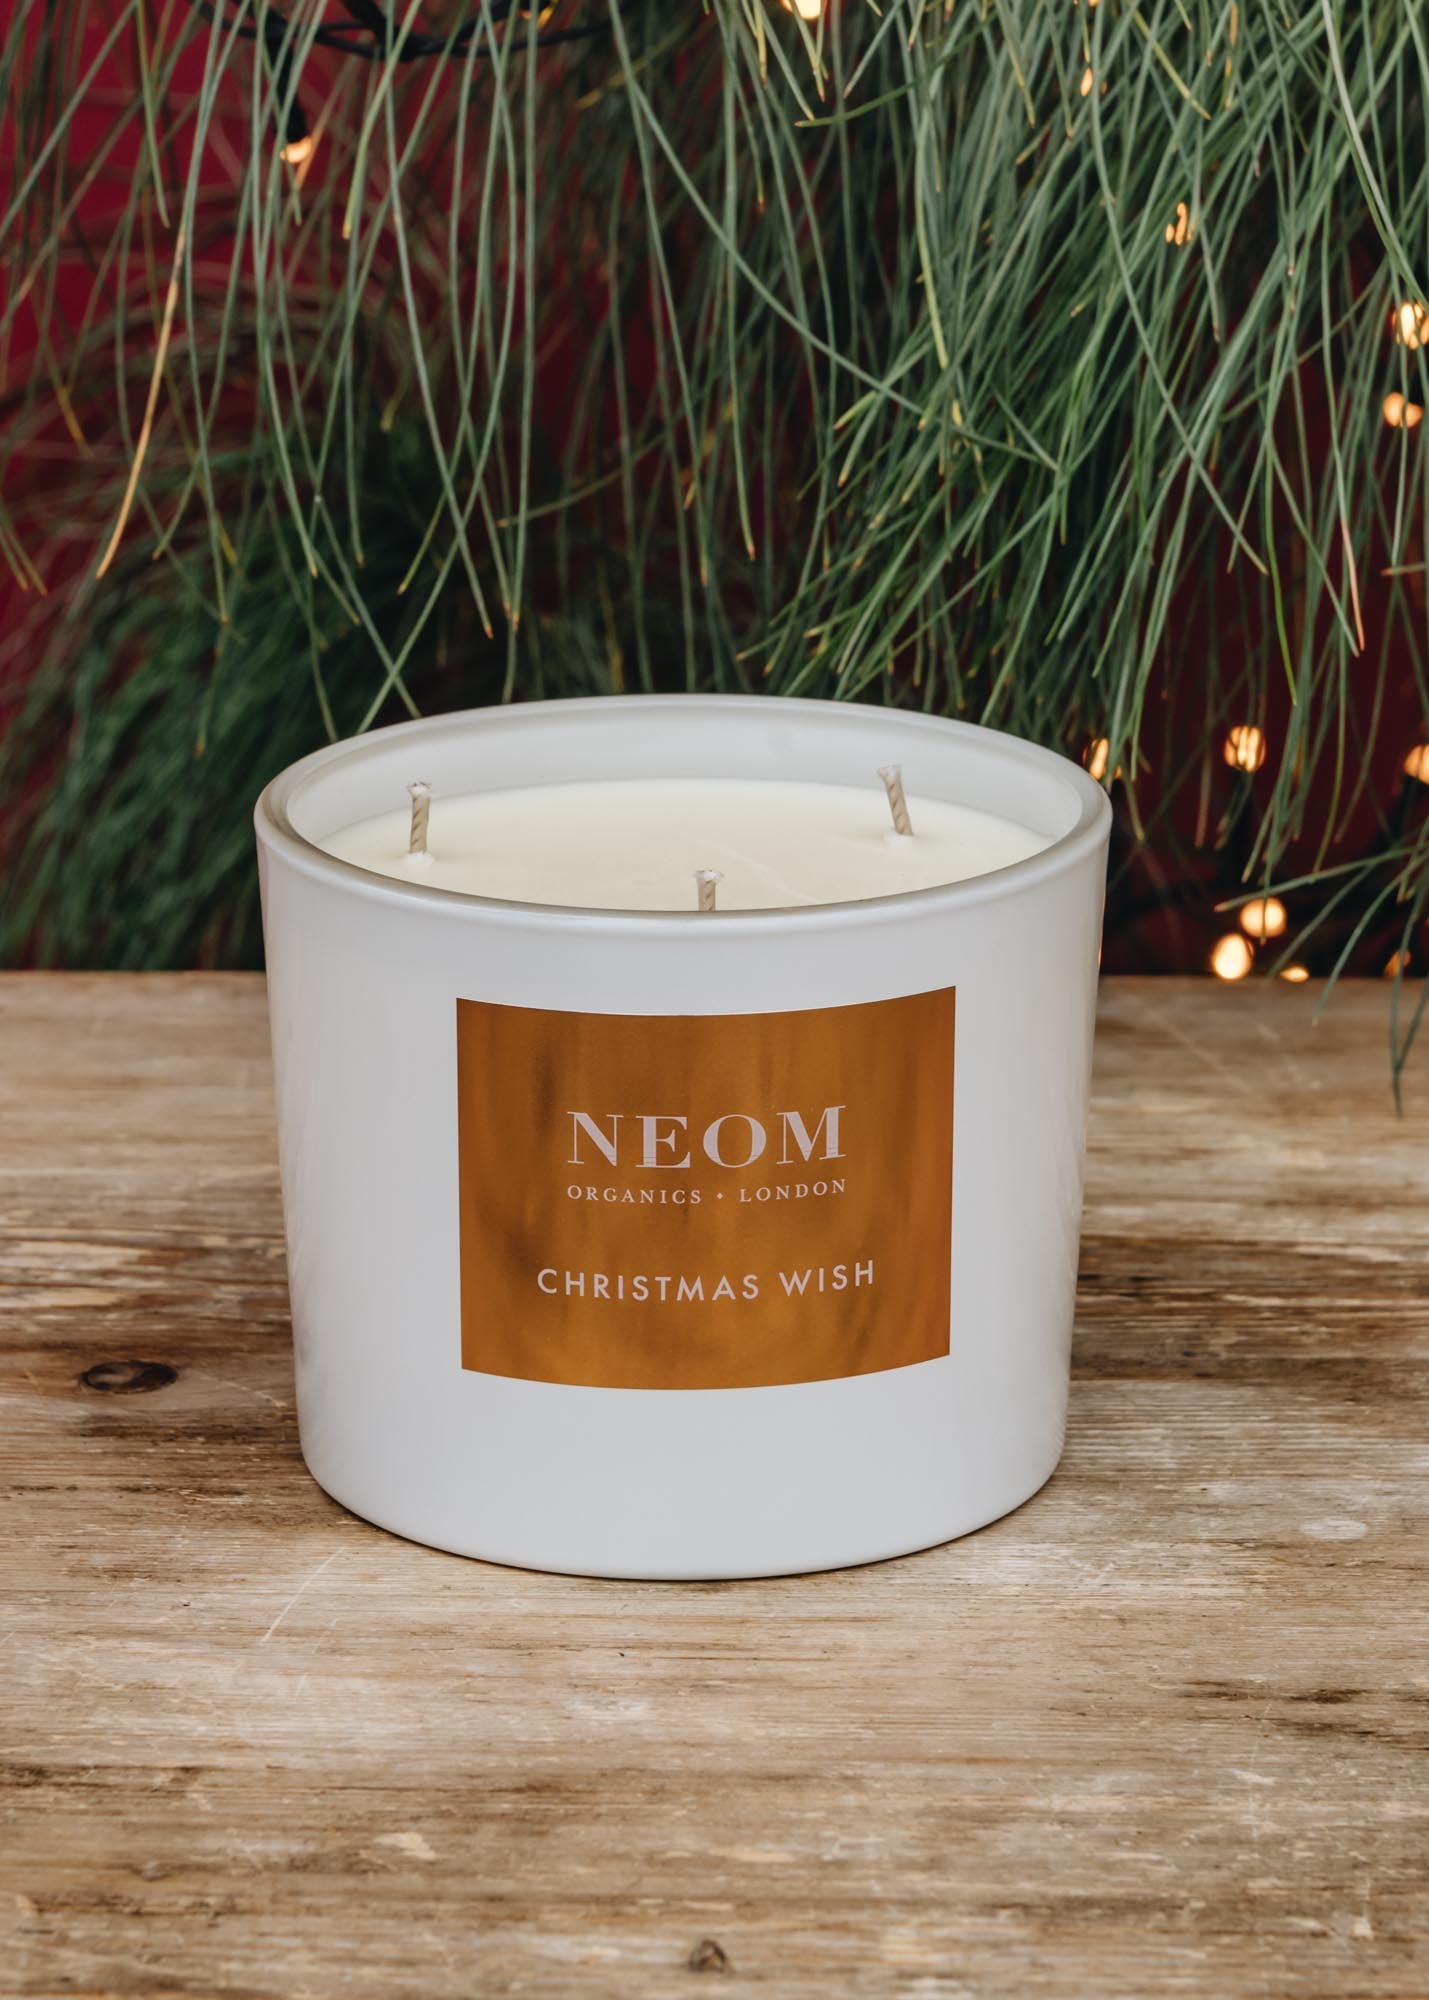 Neom Organics Christmas Wish Three Wick Candle